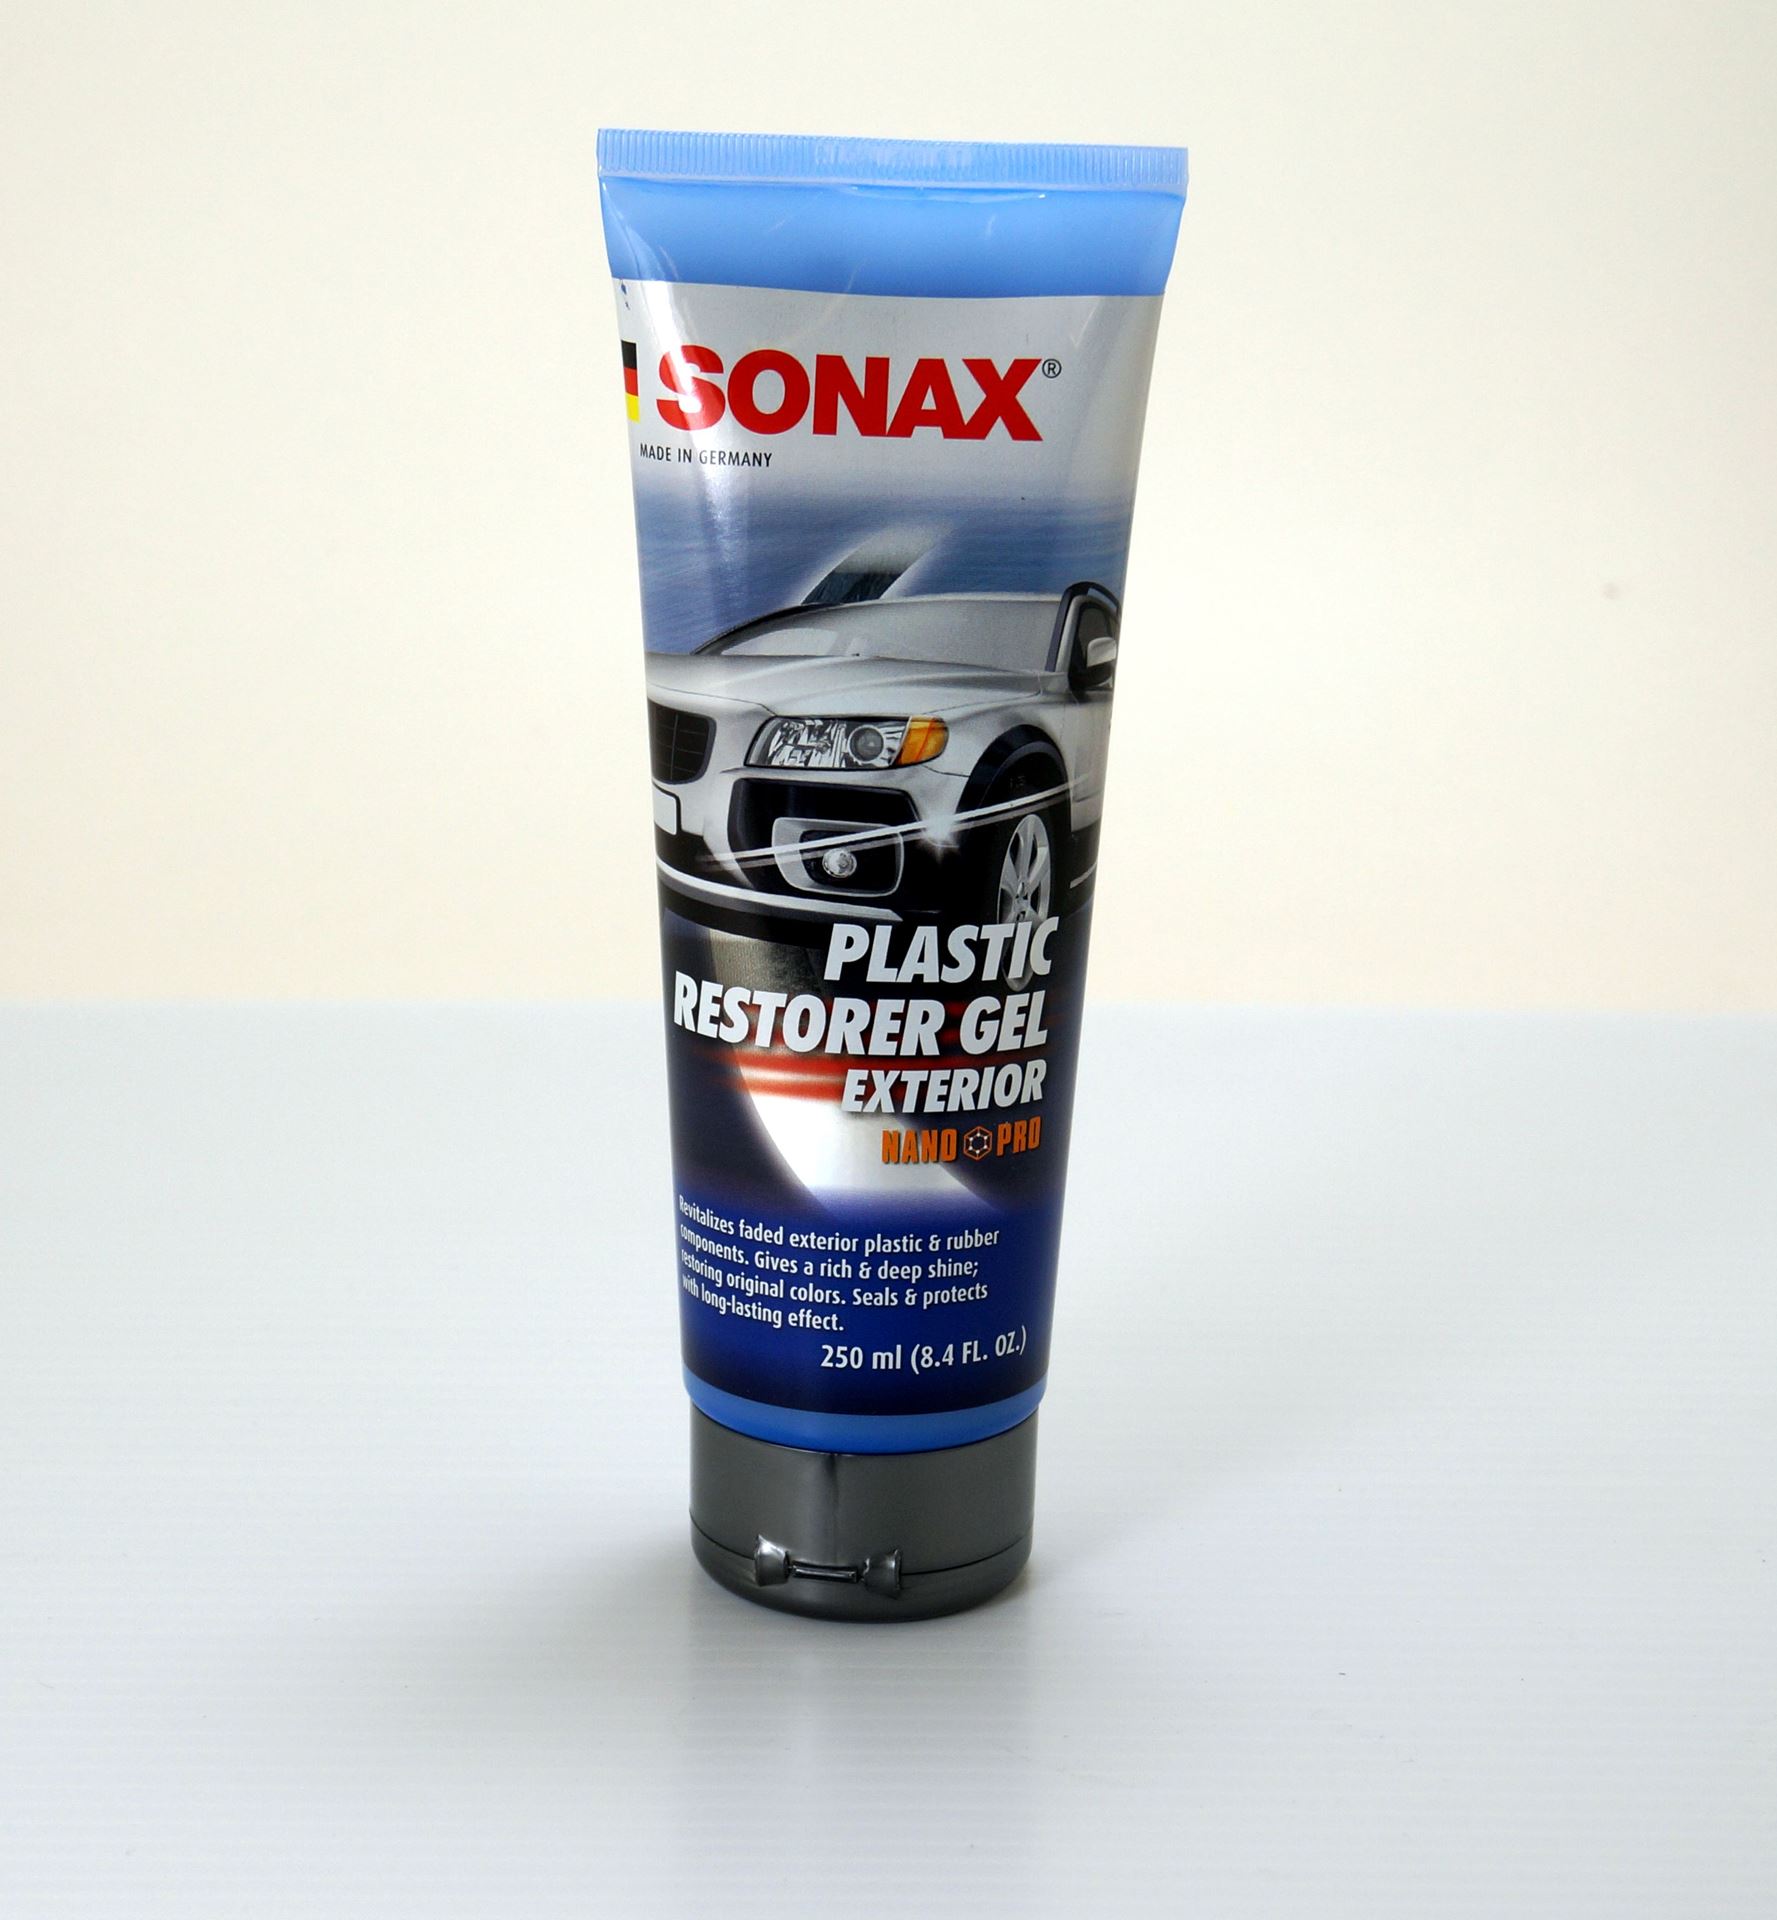 SONAX Plastic Restorer Gel. Professional Detailing Products